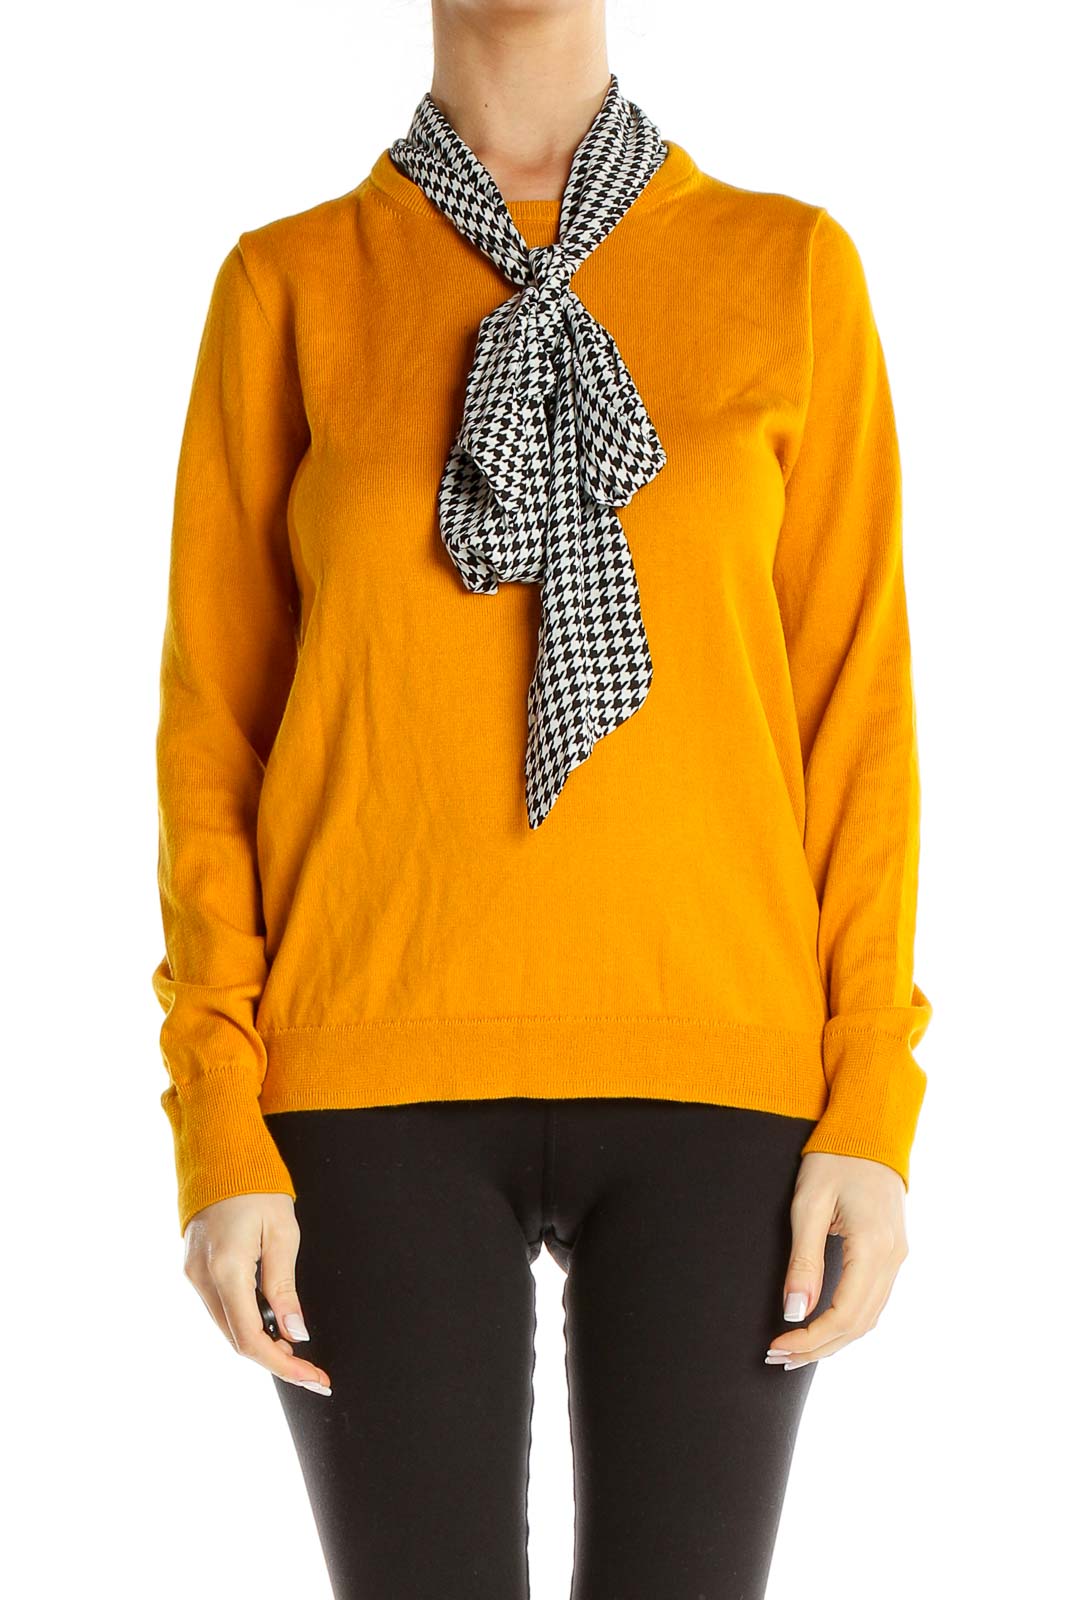 Houndstooth Neck-Tie Orange Sweater Front